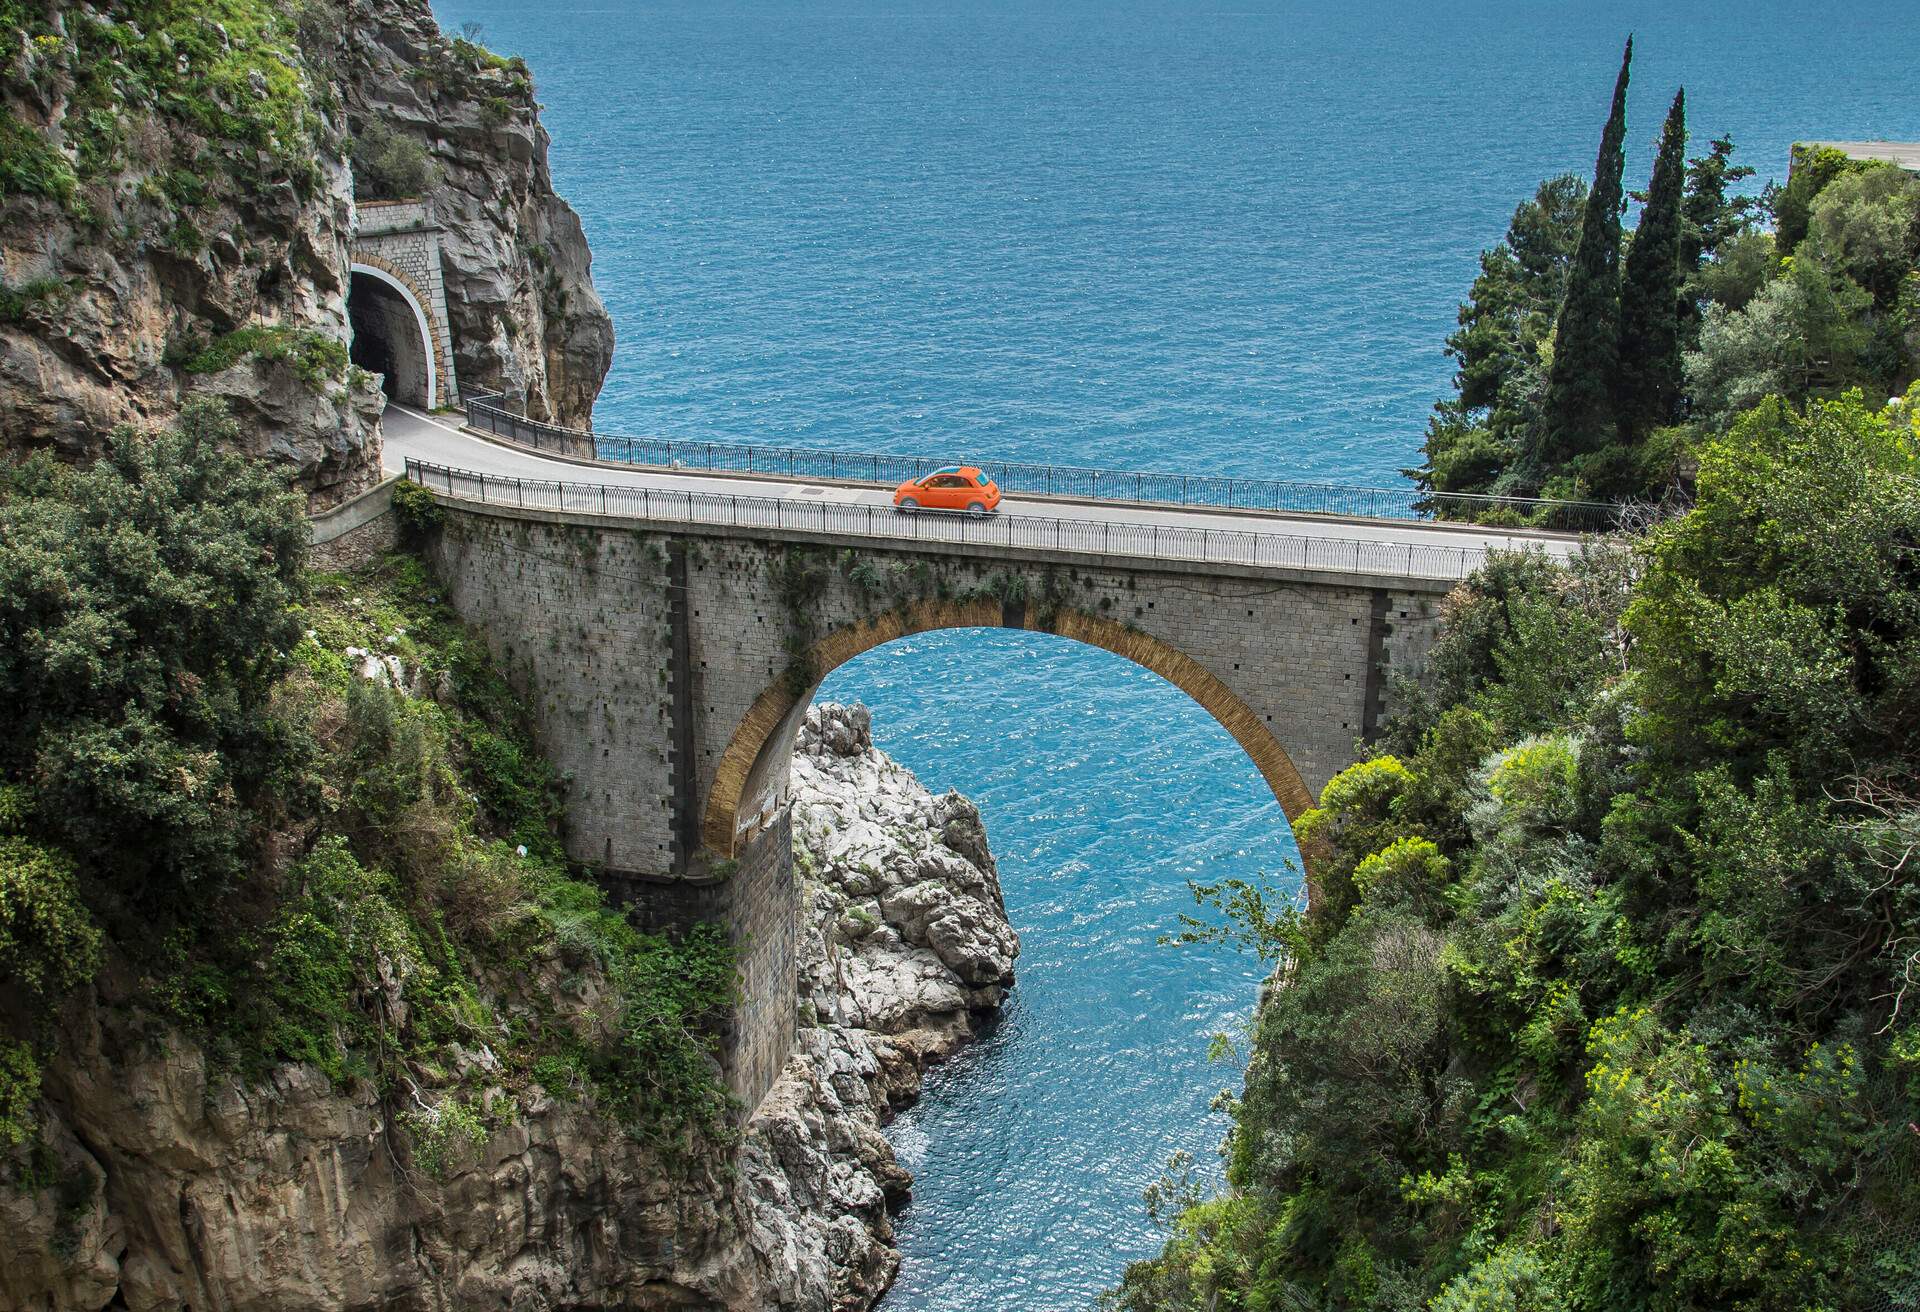 A car crosses a seaside gorge on an arch bridge.